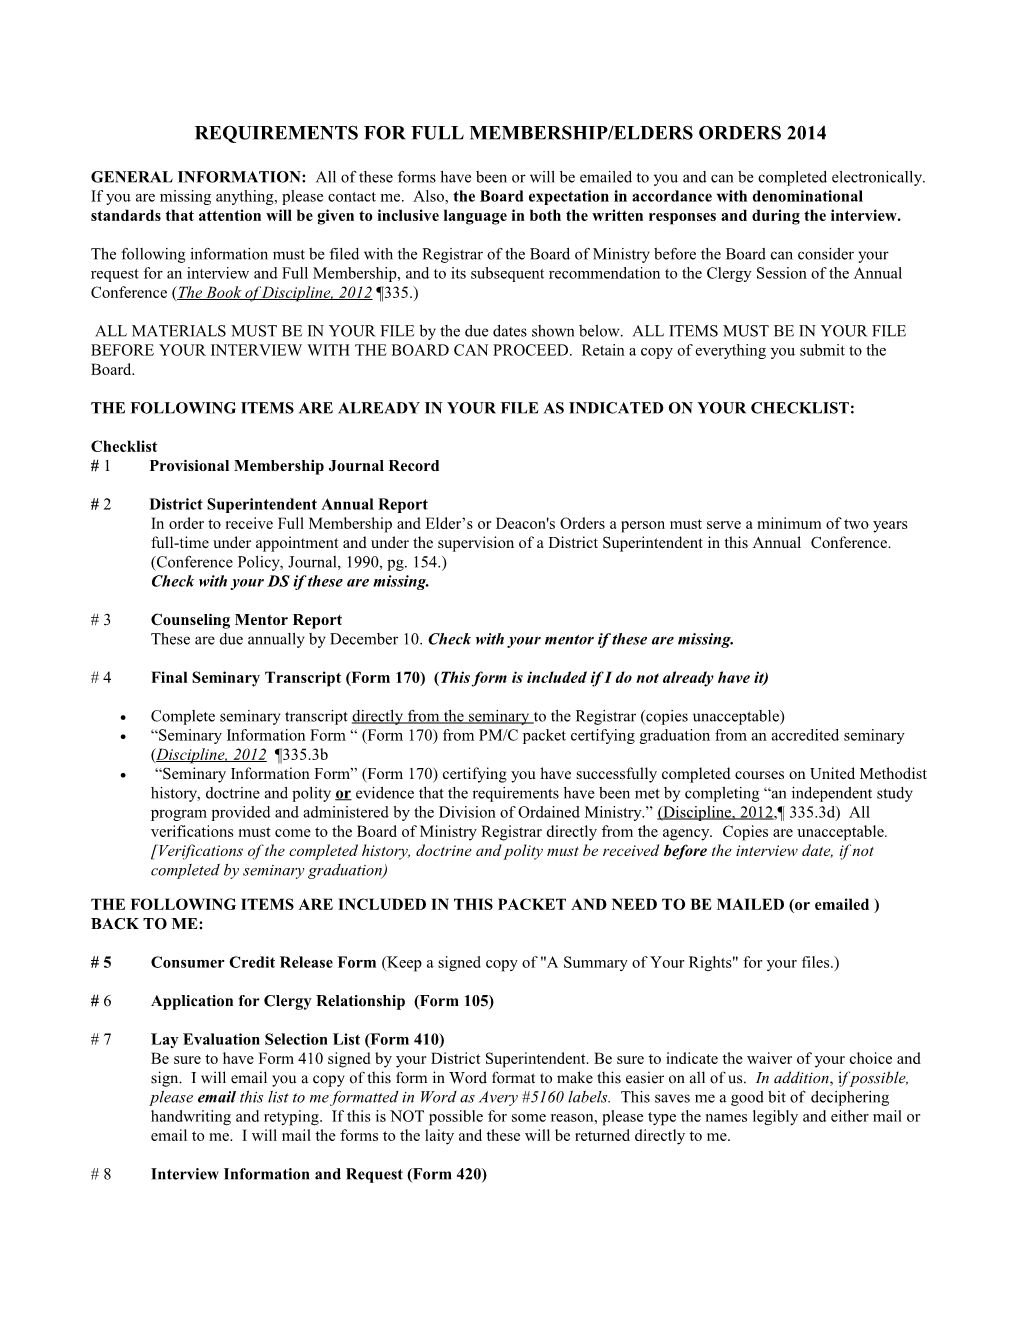 Requirements for Full Membership/Elders Orders 2004